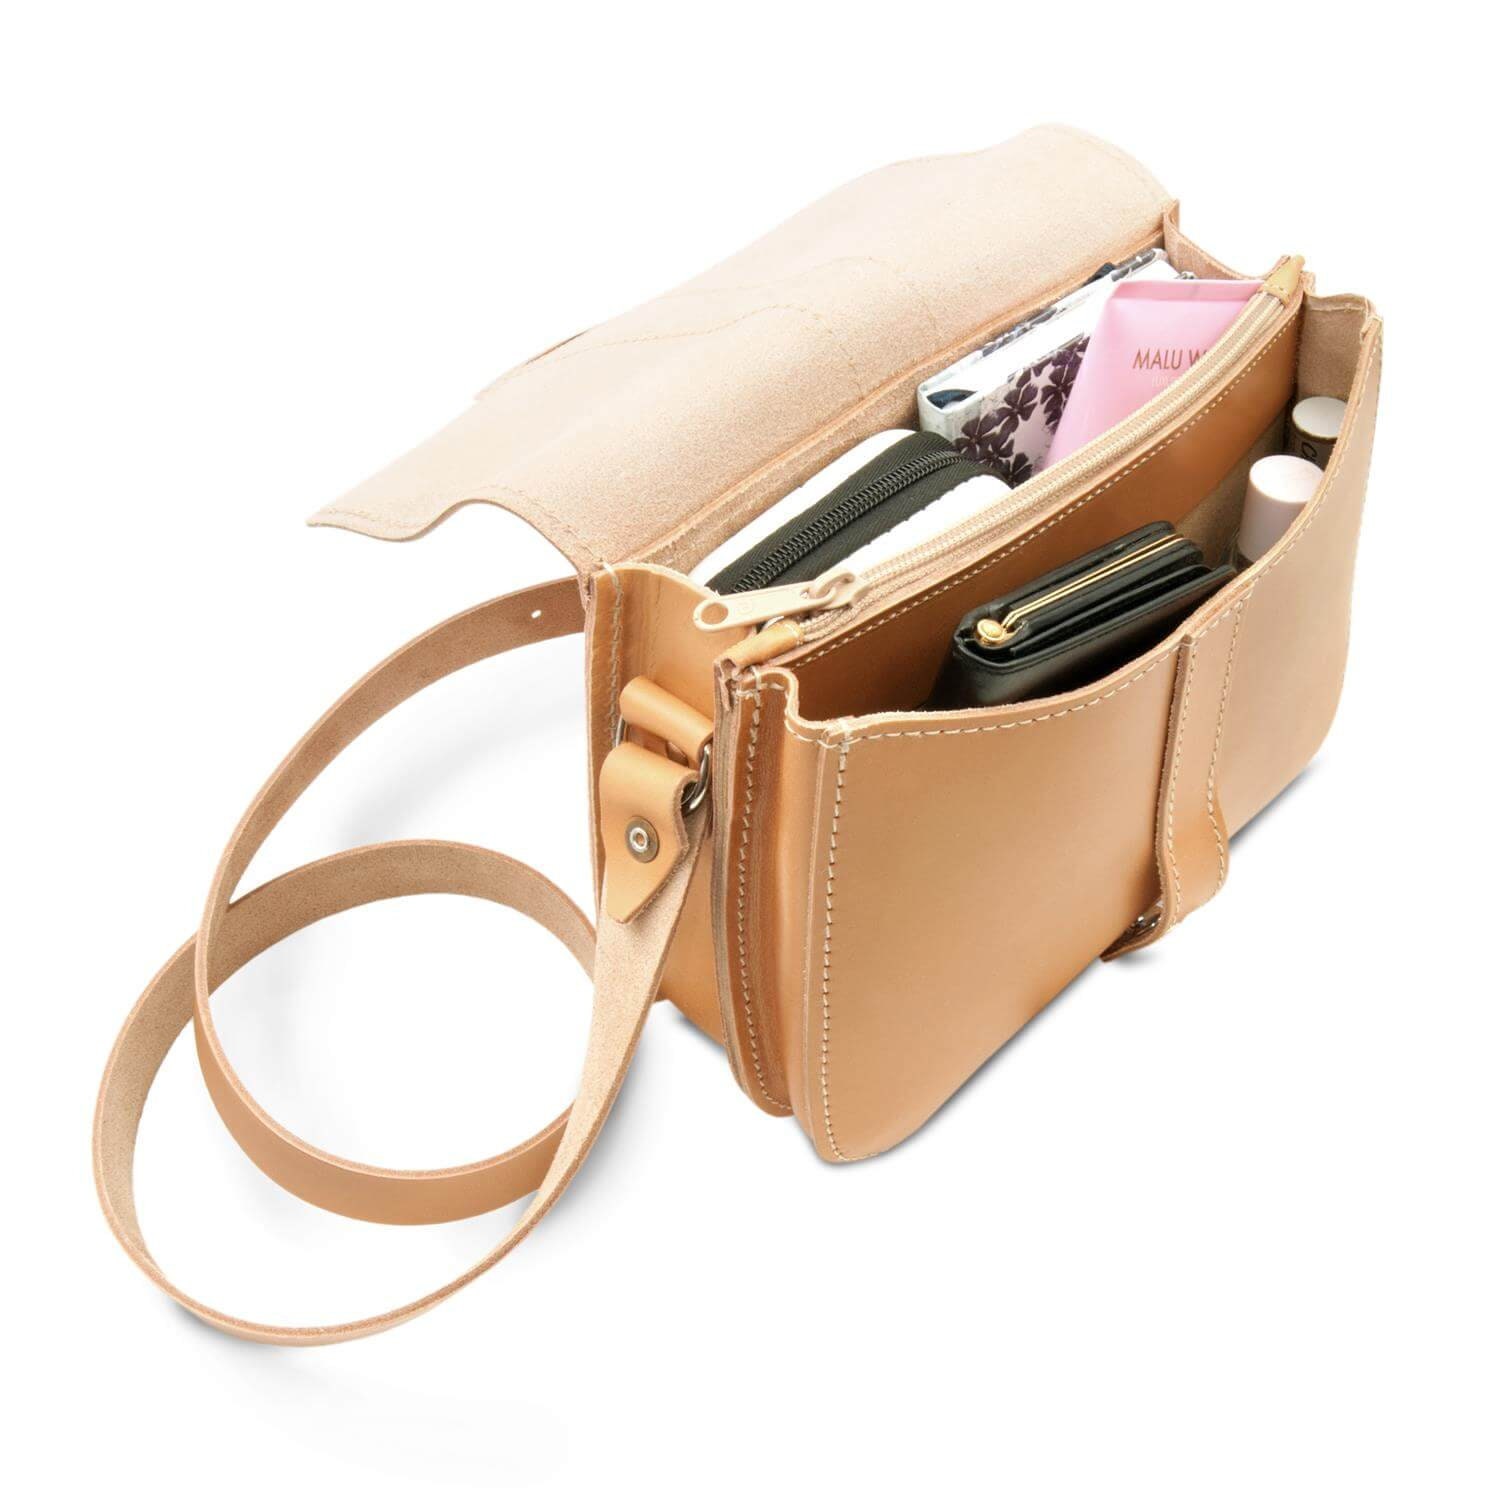 Perfect Leather Bag to Give Away Small Leather Handbag 